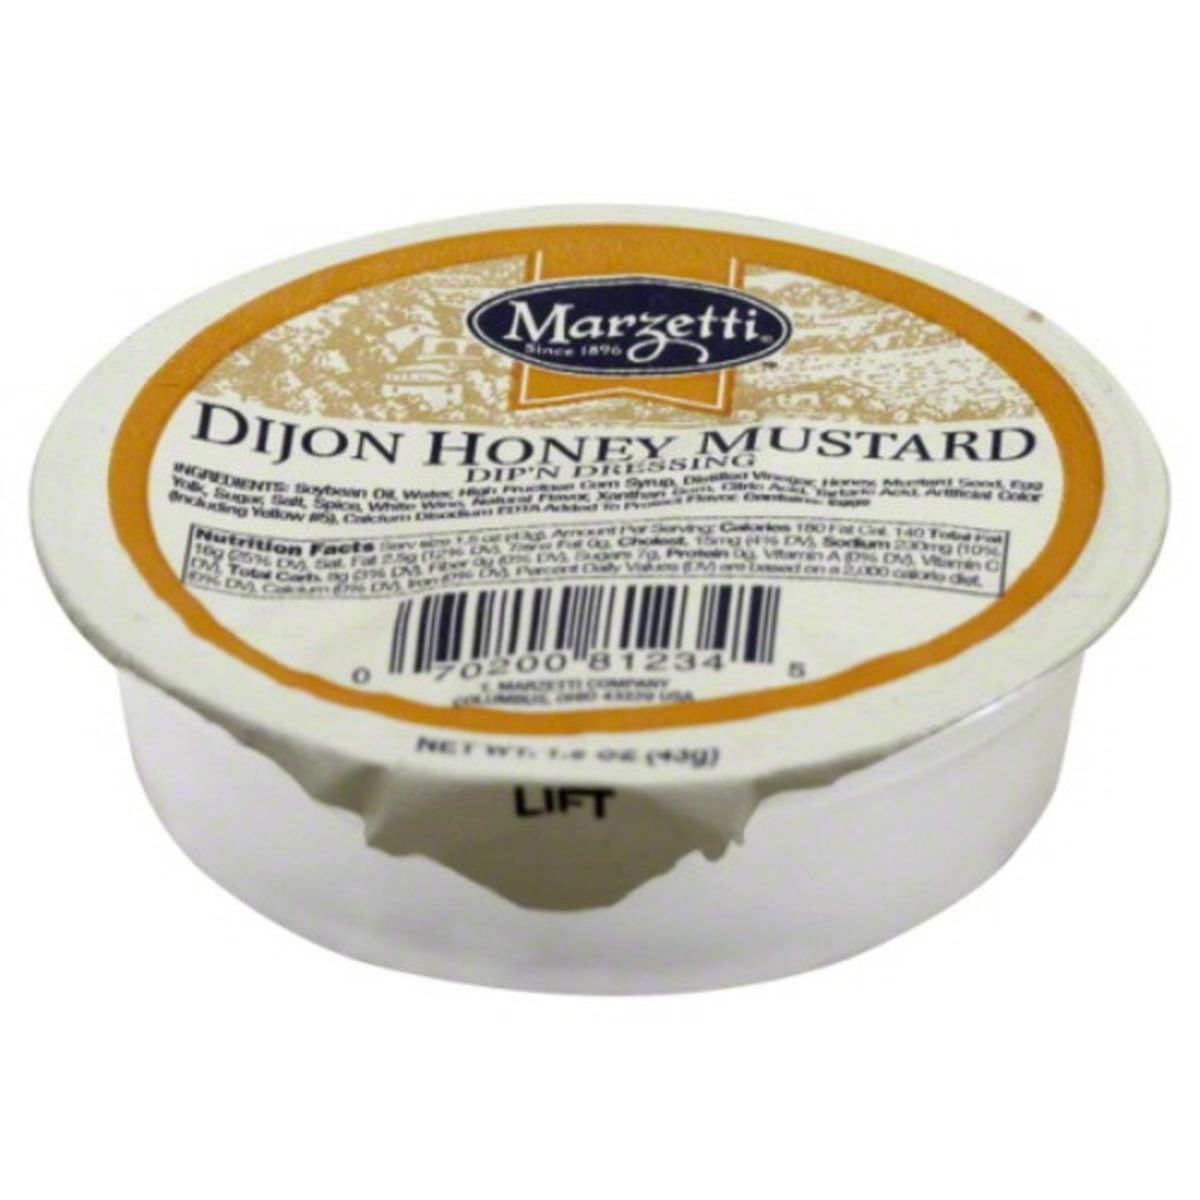 Calories in Marzetti Dijon Honey Mustard Dip'n Dressing